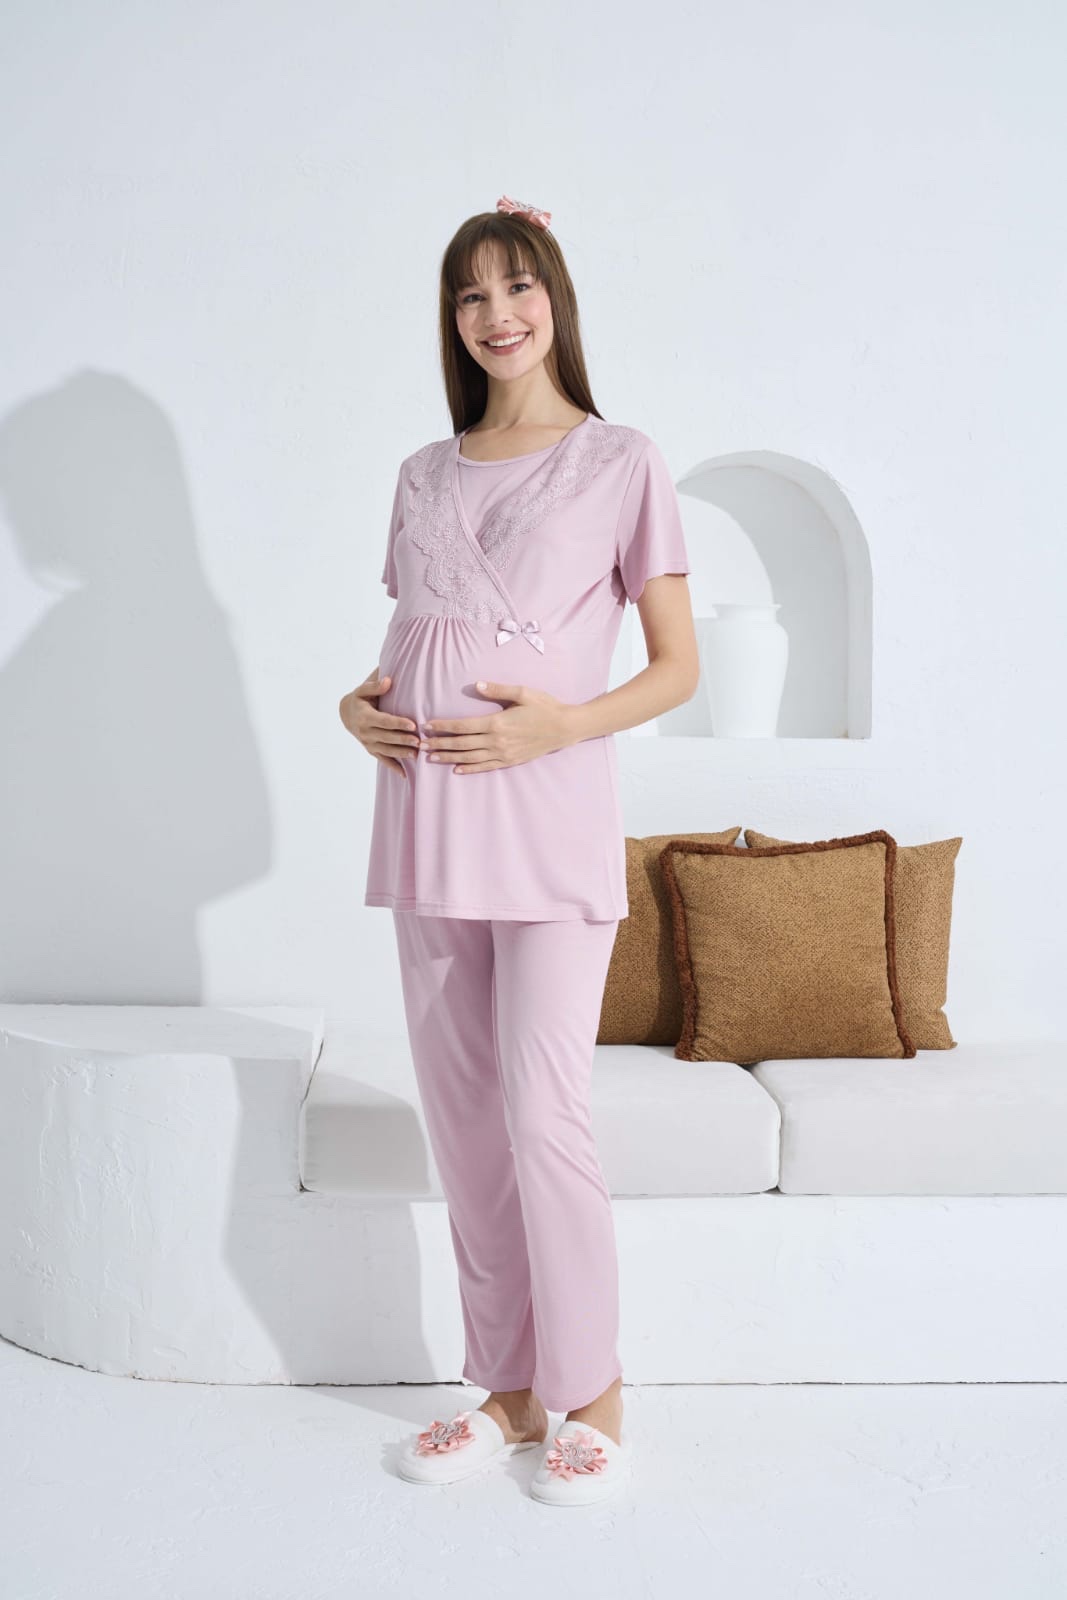 Pyjama de grossesse et allaitement